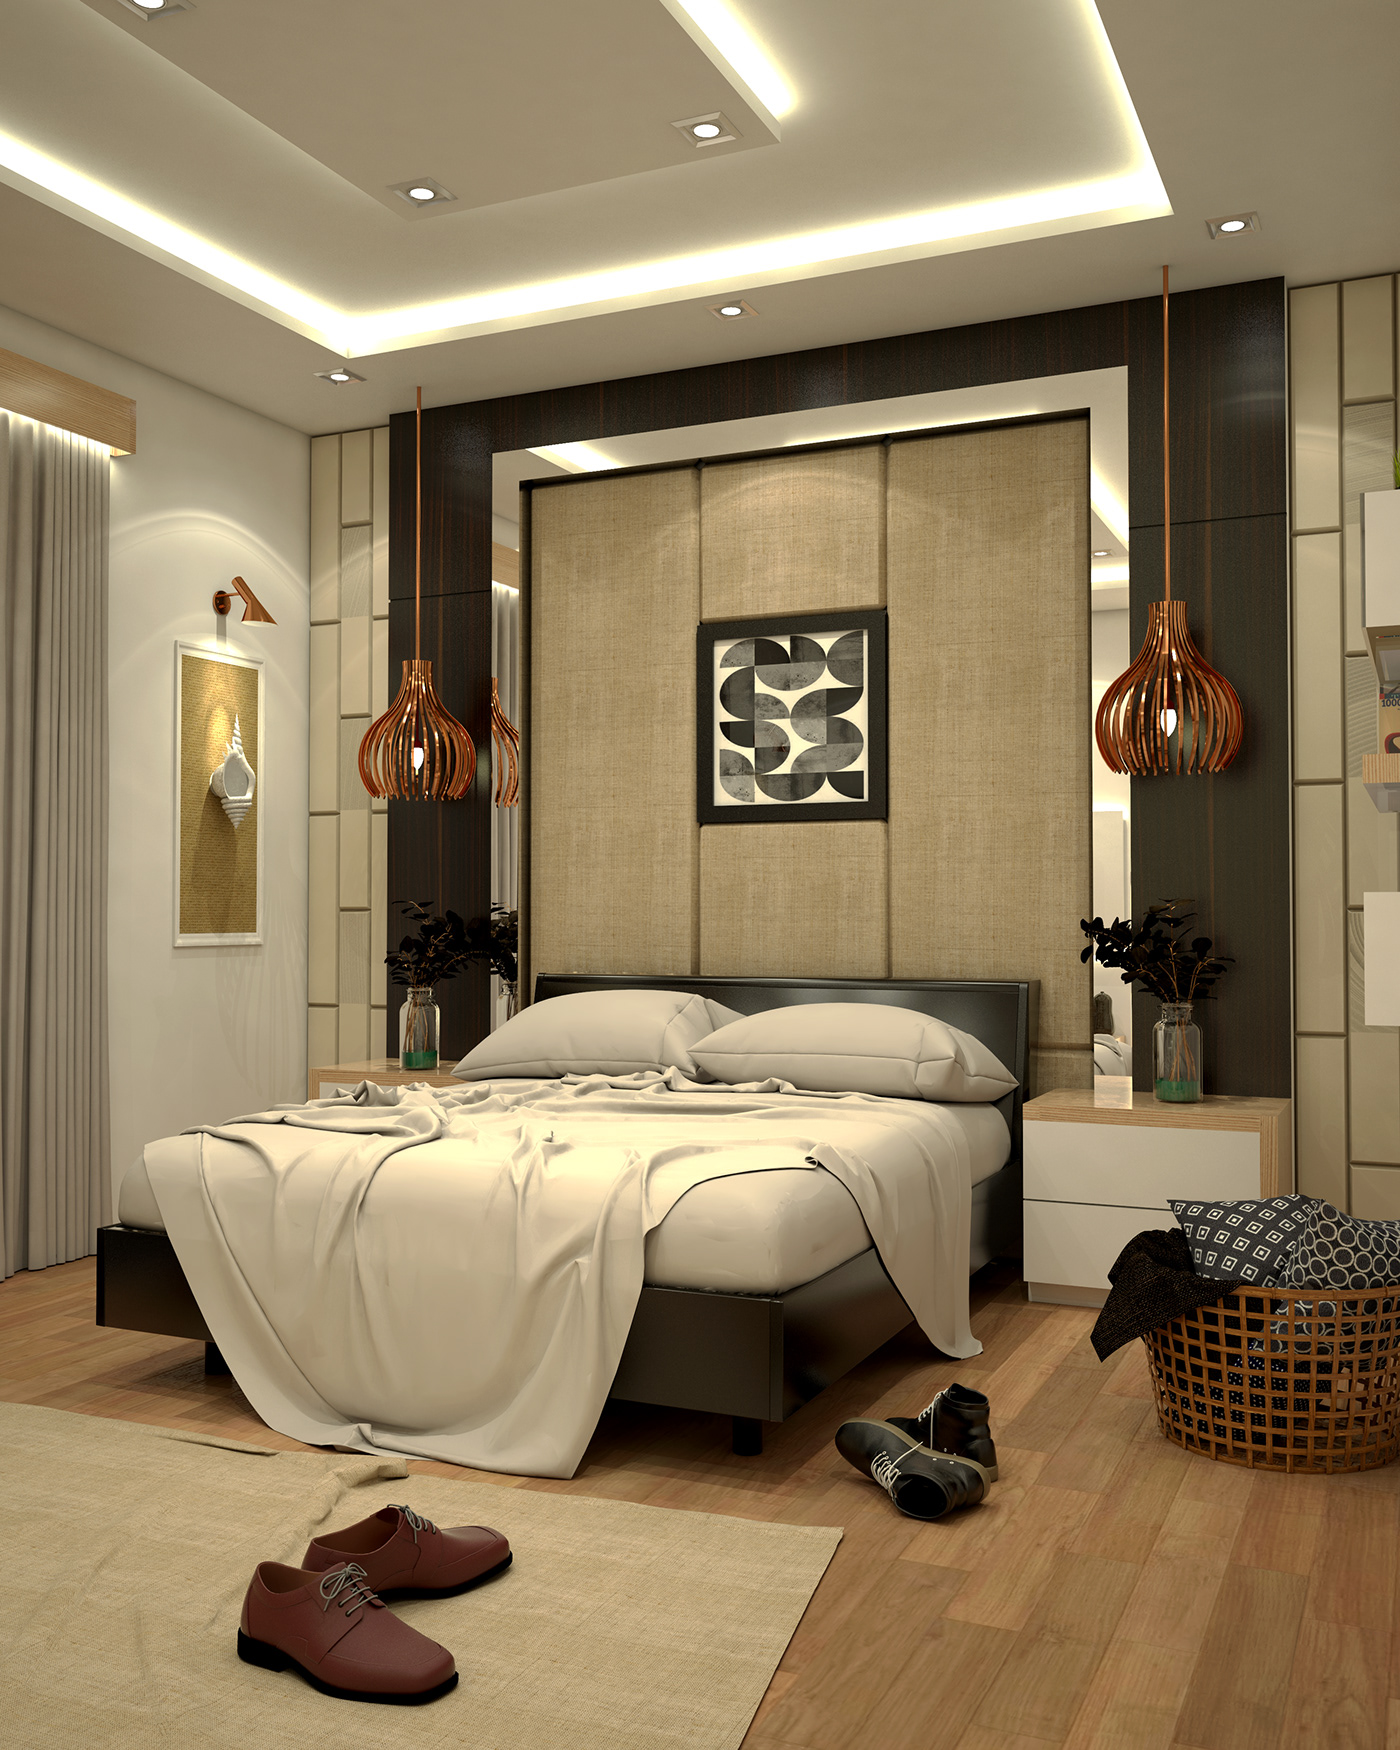 AutoCAD SketchUP architecture Interior interior design  bed room design bed room interior bed interior furniture design  room design